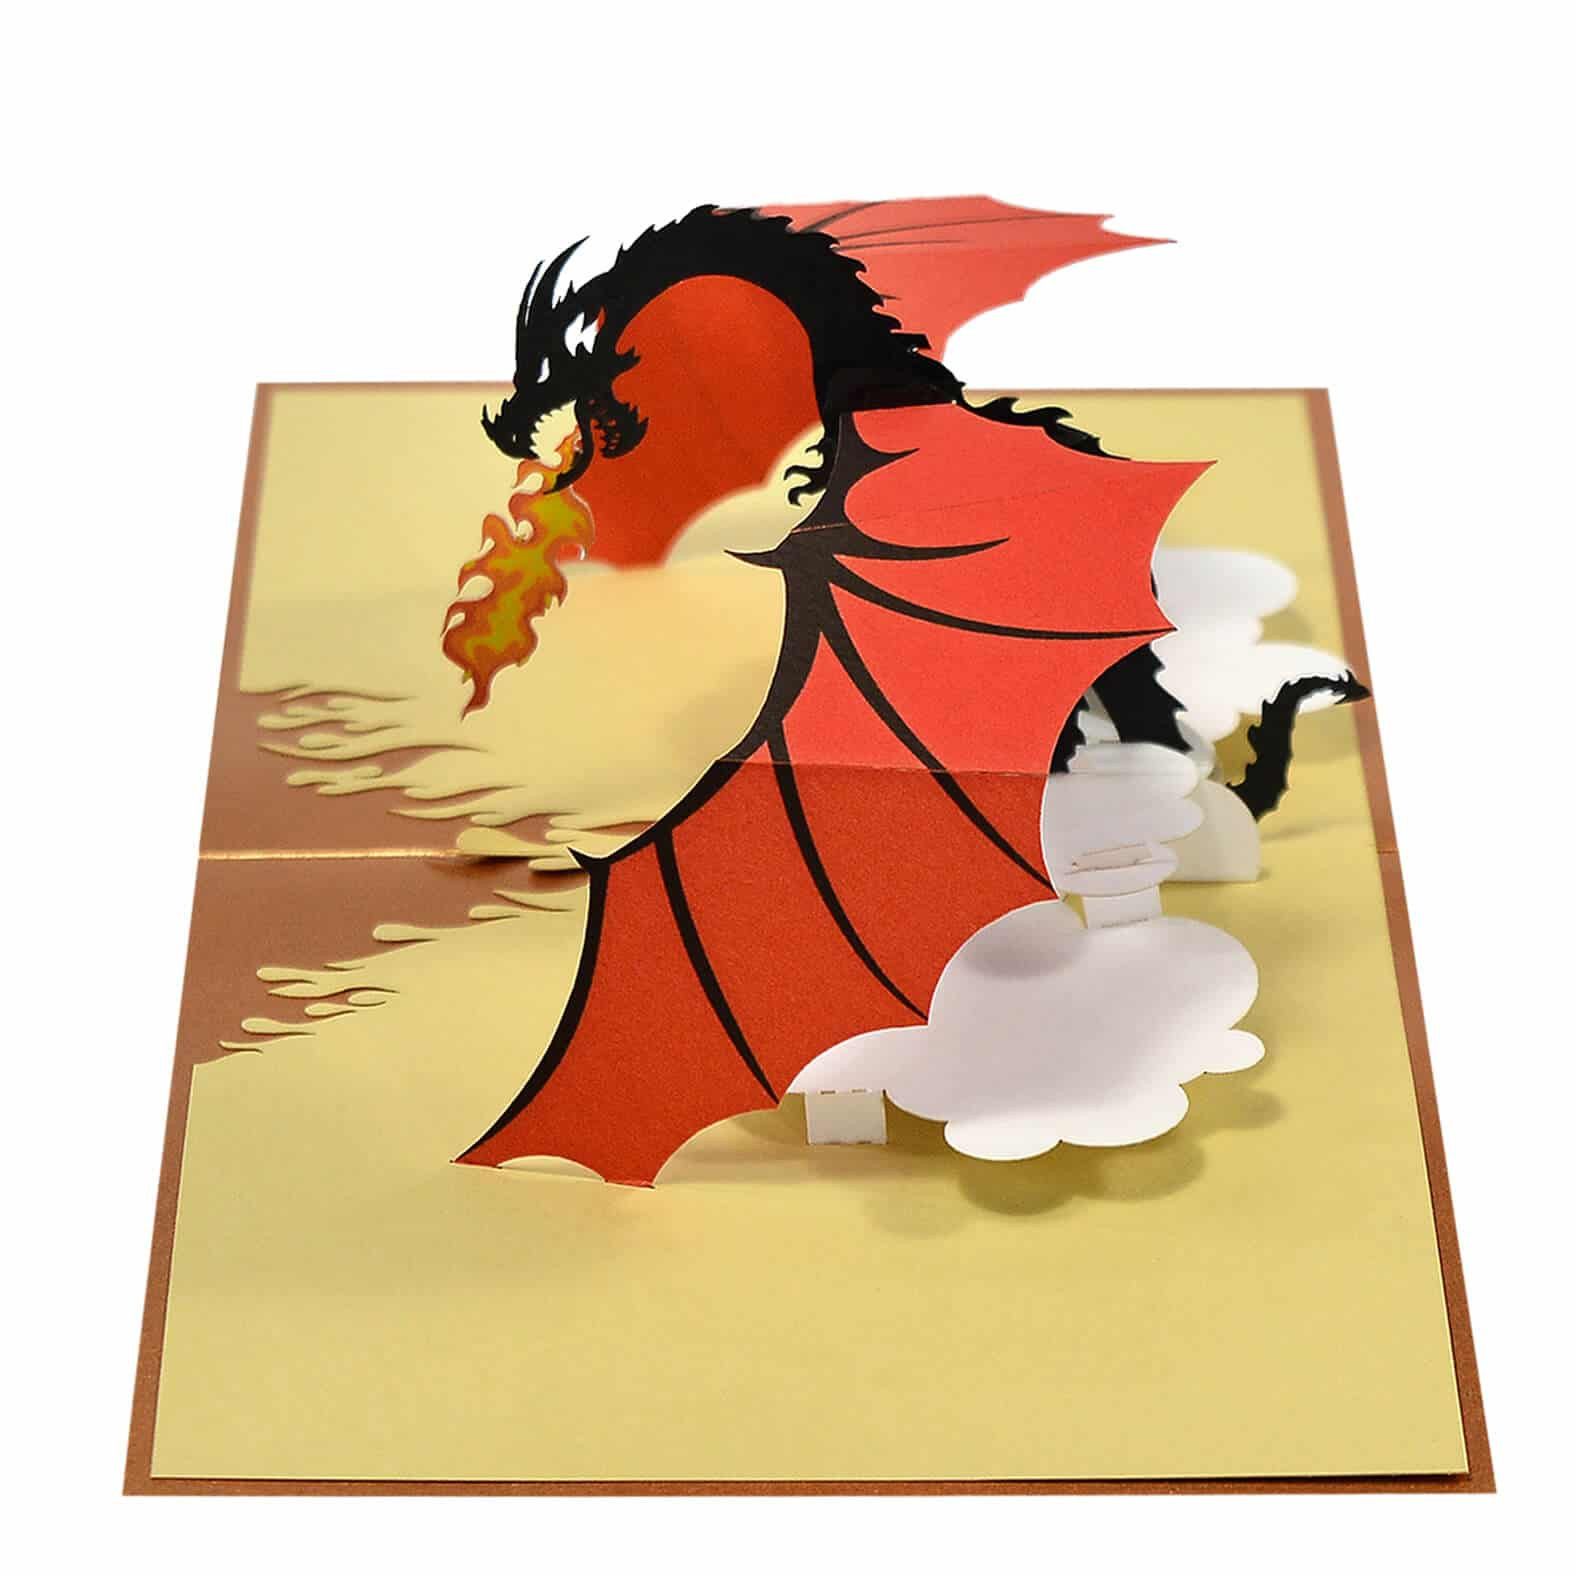 Fire Breathing Dragon 3D Pop Up Card